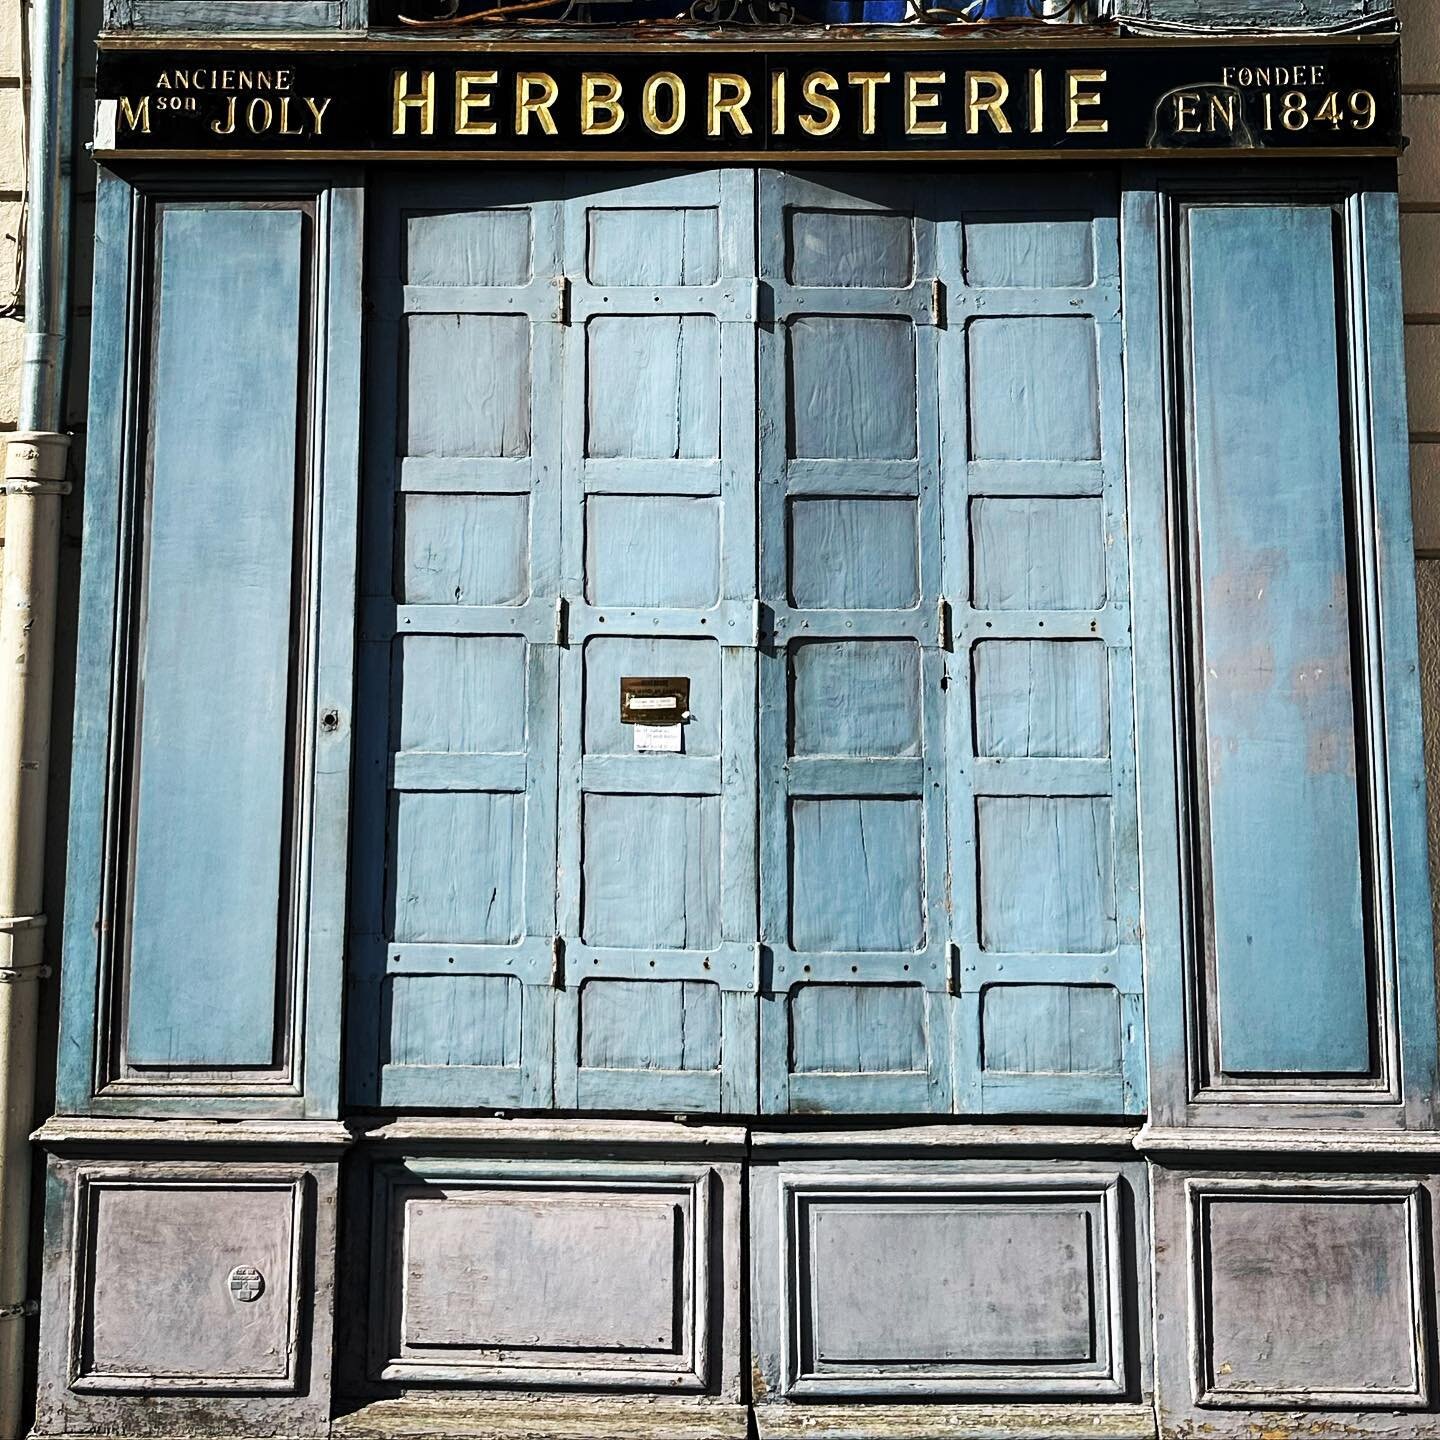 #herbalismforlife #established1849 
.
.
#lyonfrance #herboristerie #herbalism #frenchinspiration #workinginfrance #streetsoflyon #taylorsmithstudio #windowshutters #artisttravels